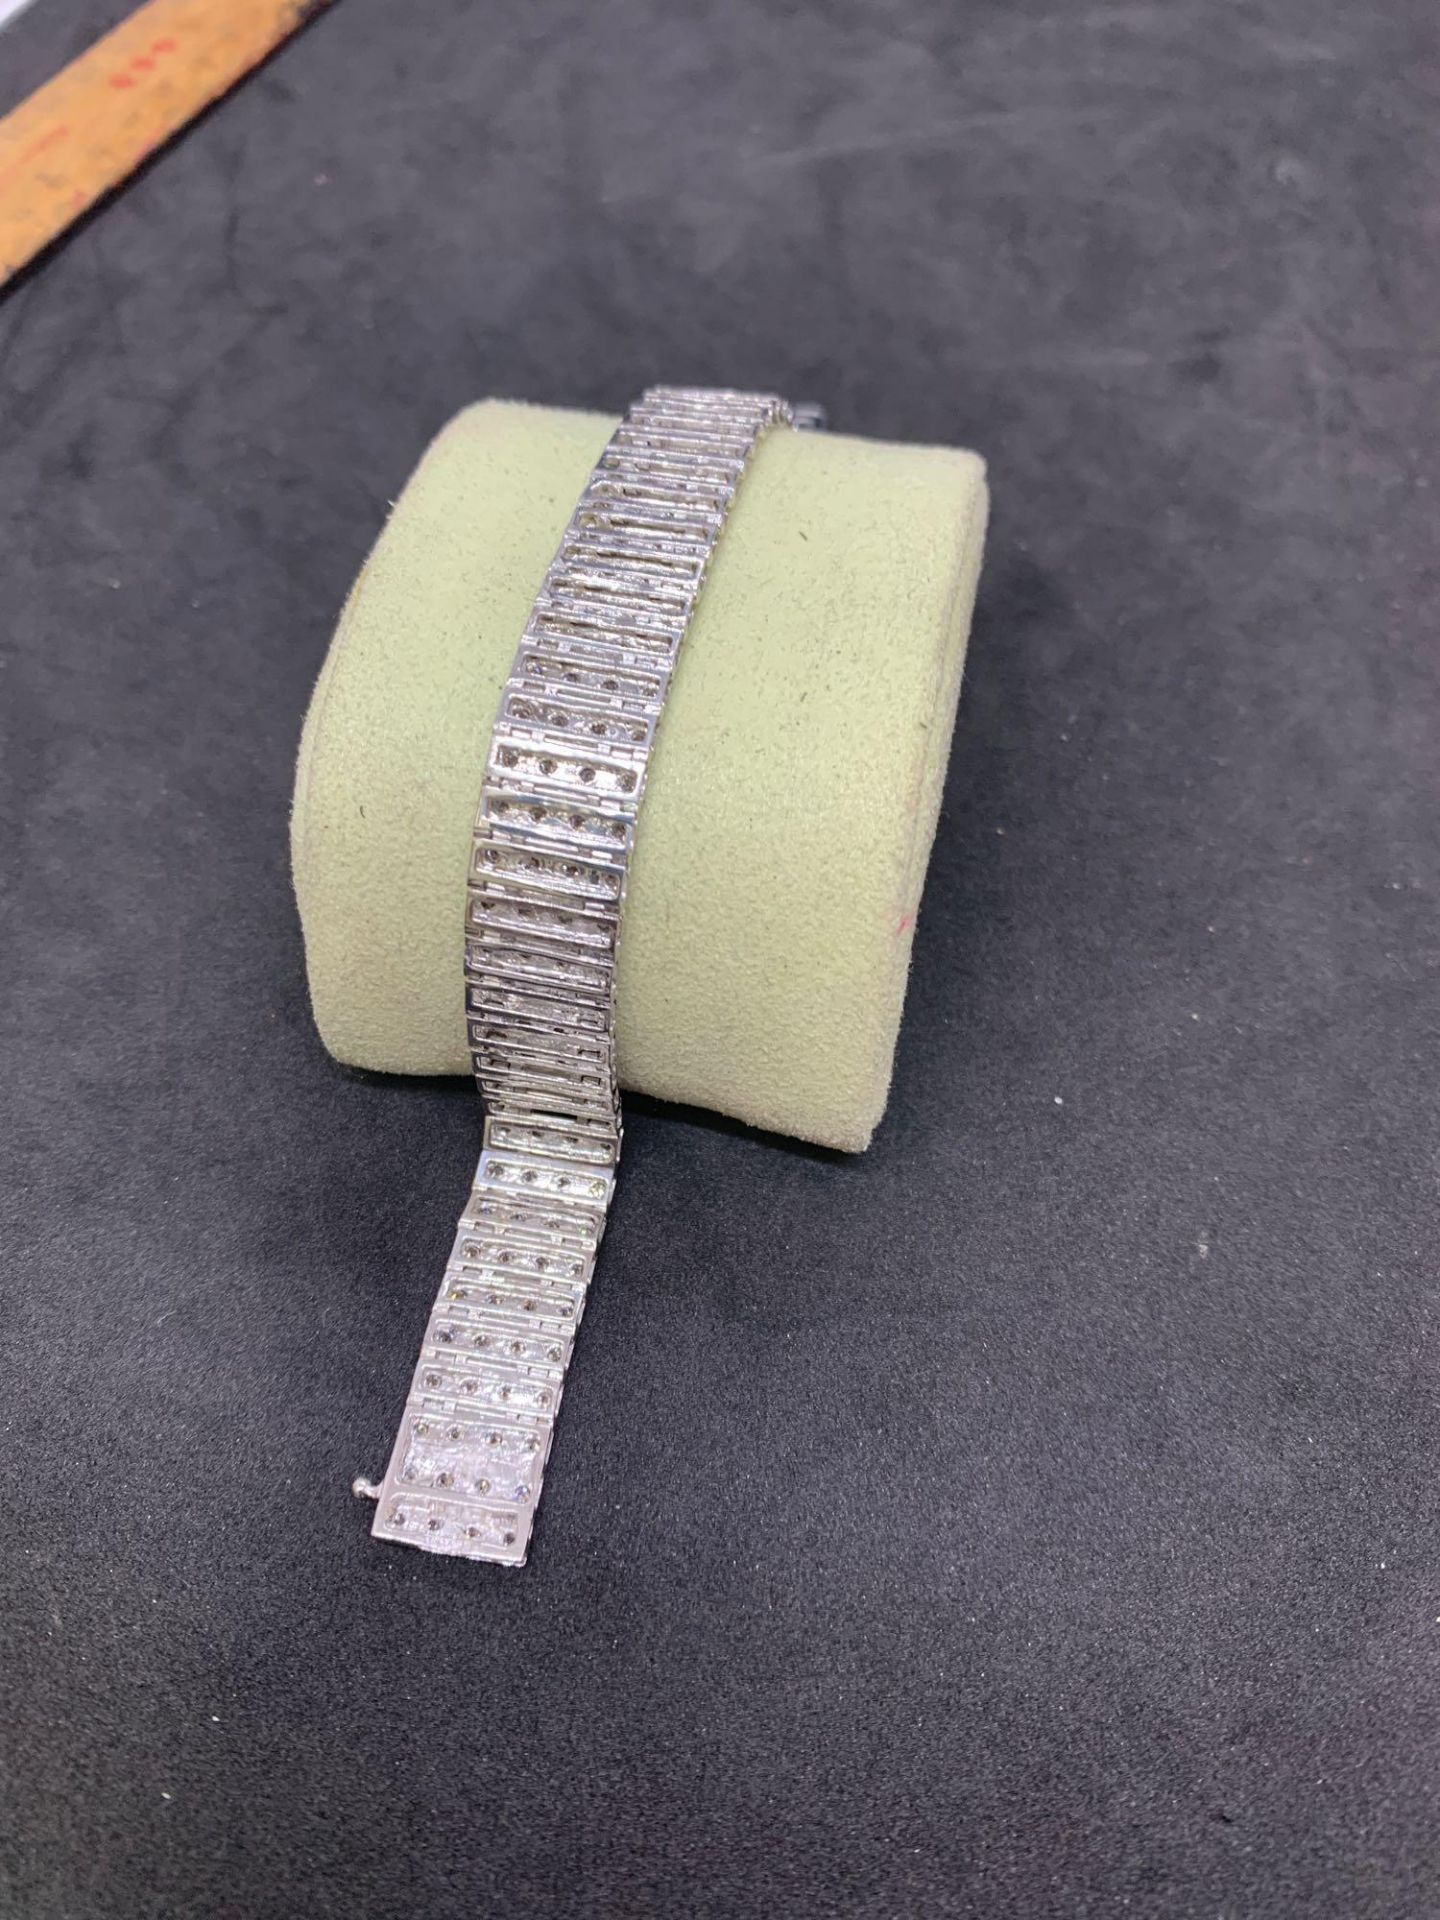 9 carat white gold diamond bracelet weighs 23 g - Image 4 of 5